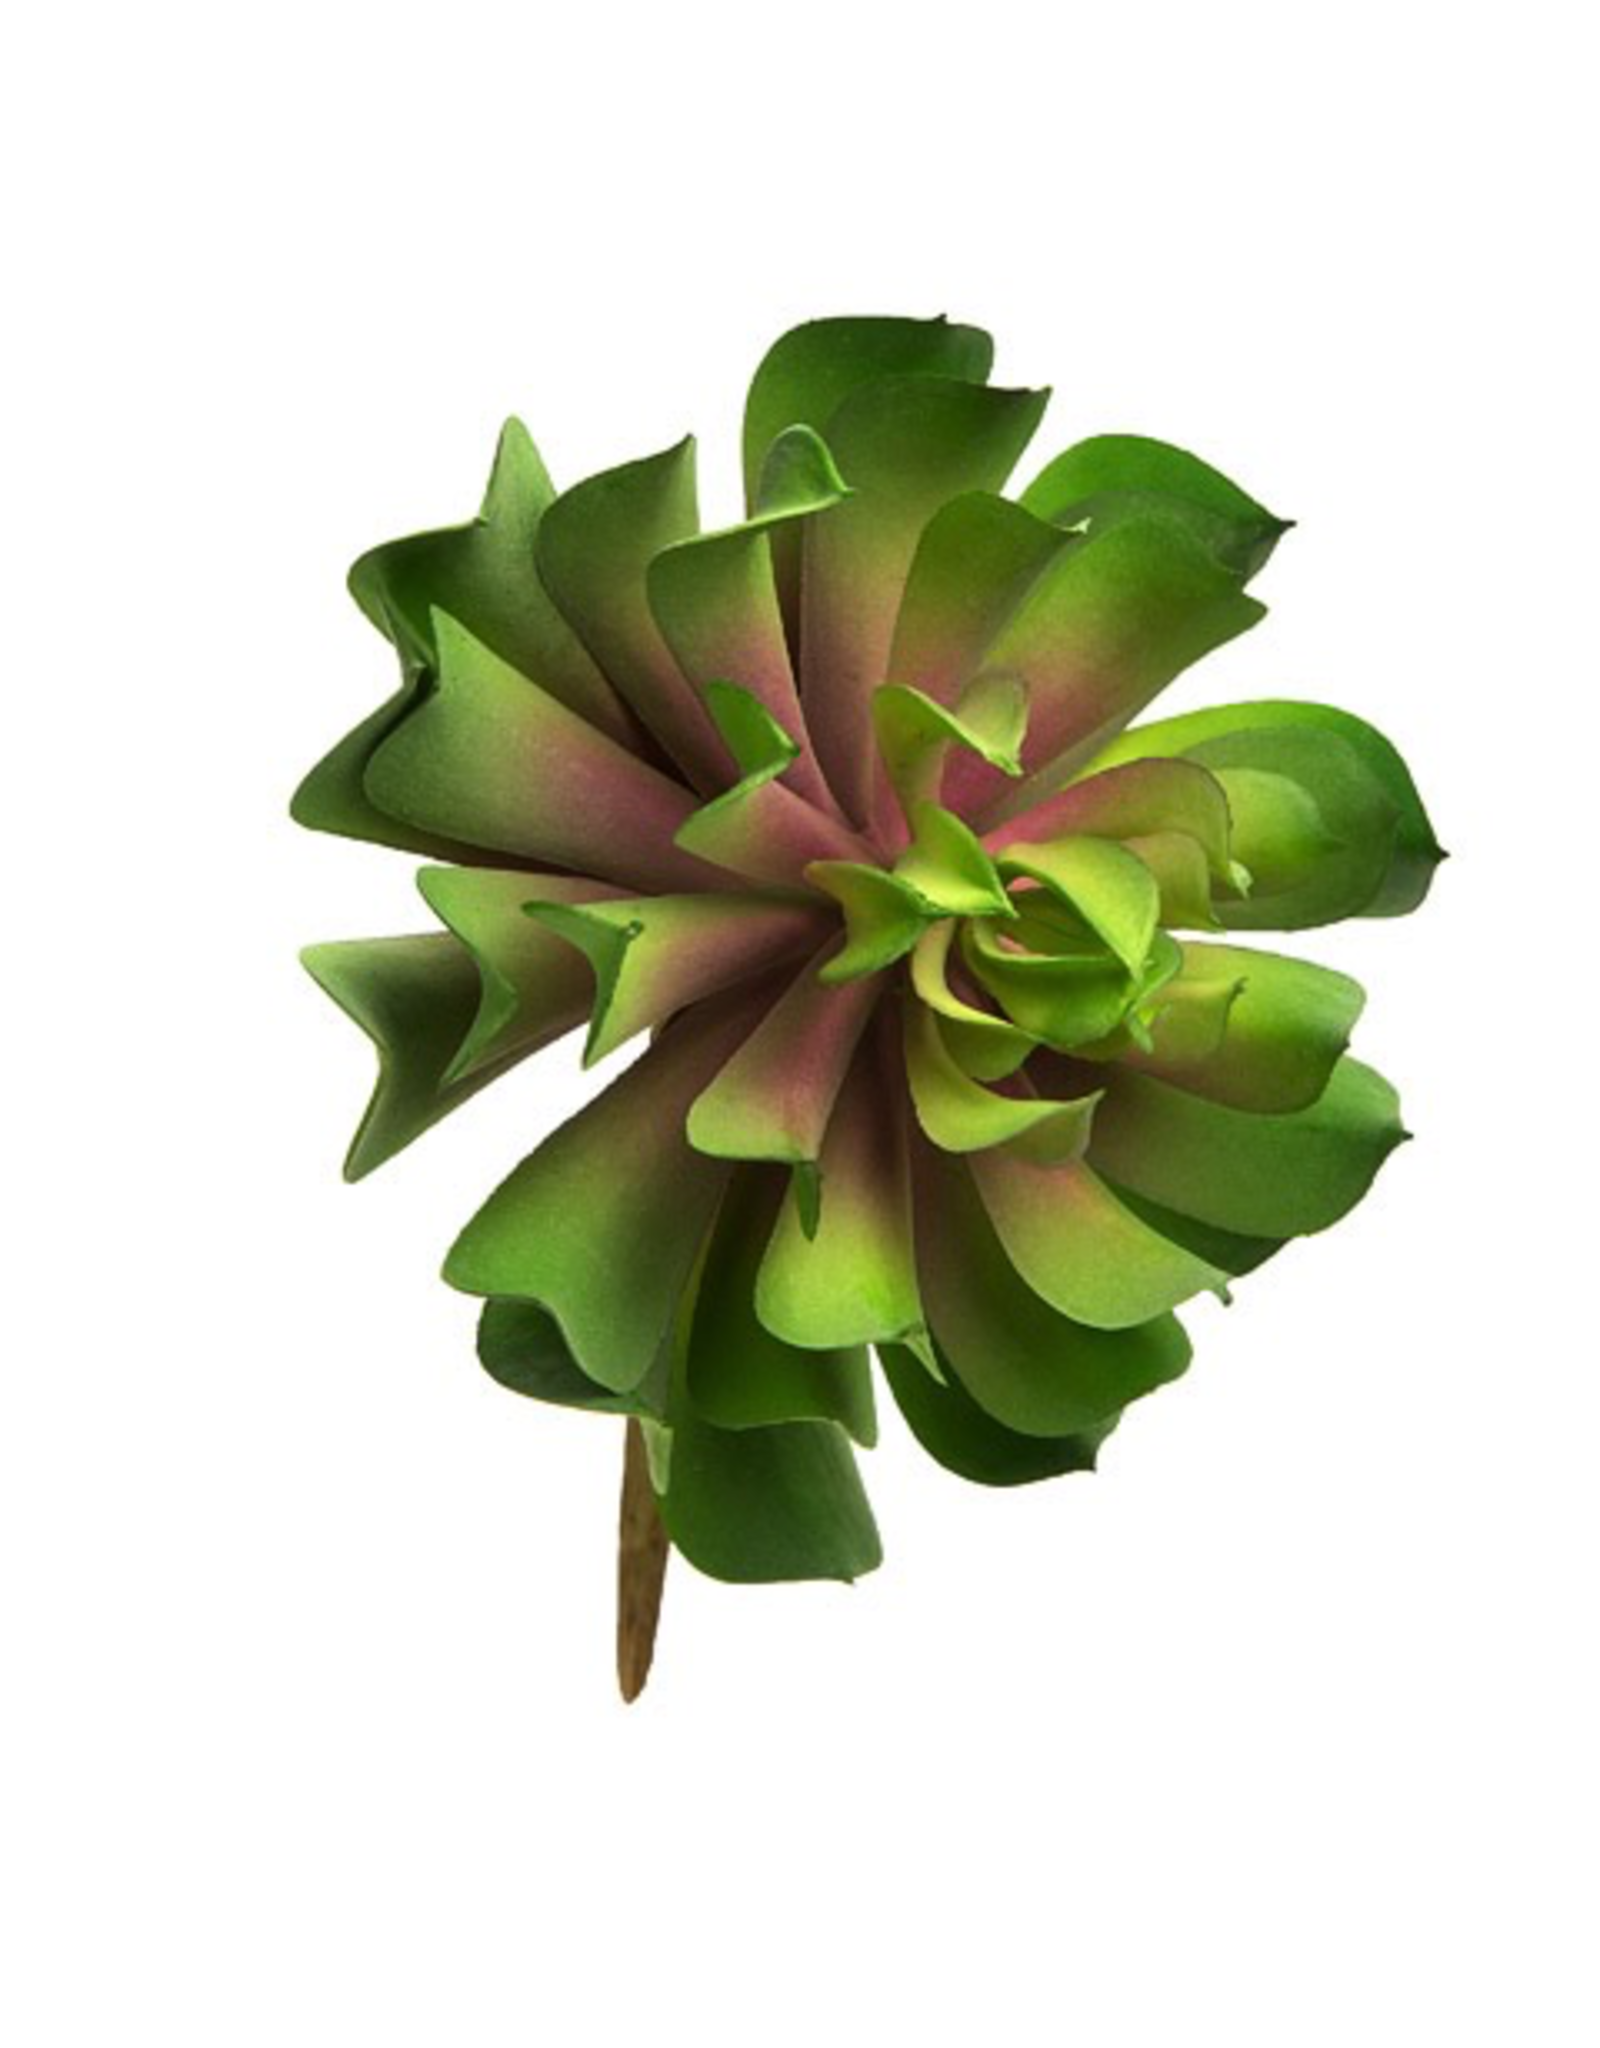 Darice Faux Succulent Green Lotus Rosette w Pink Center 4 inch